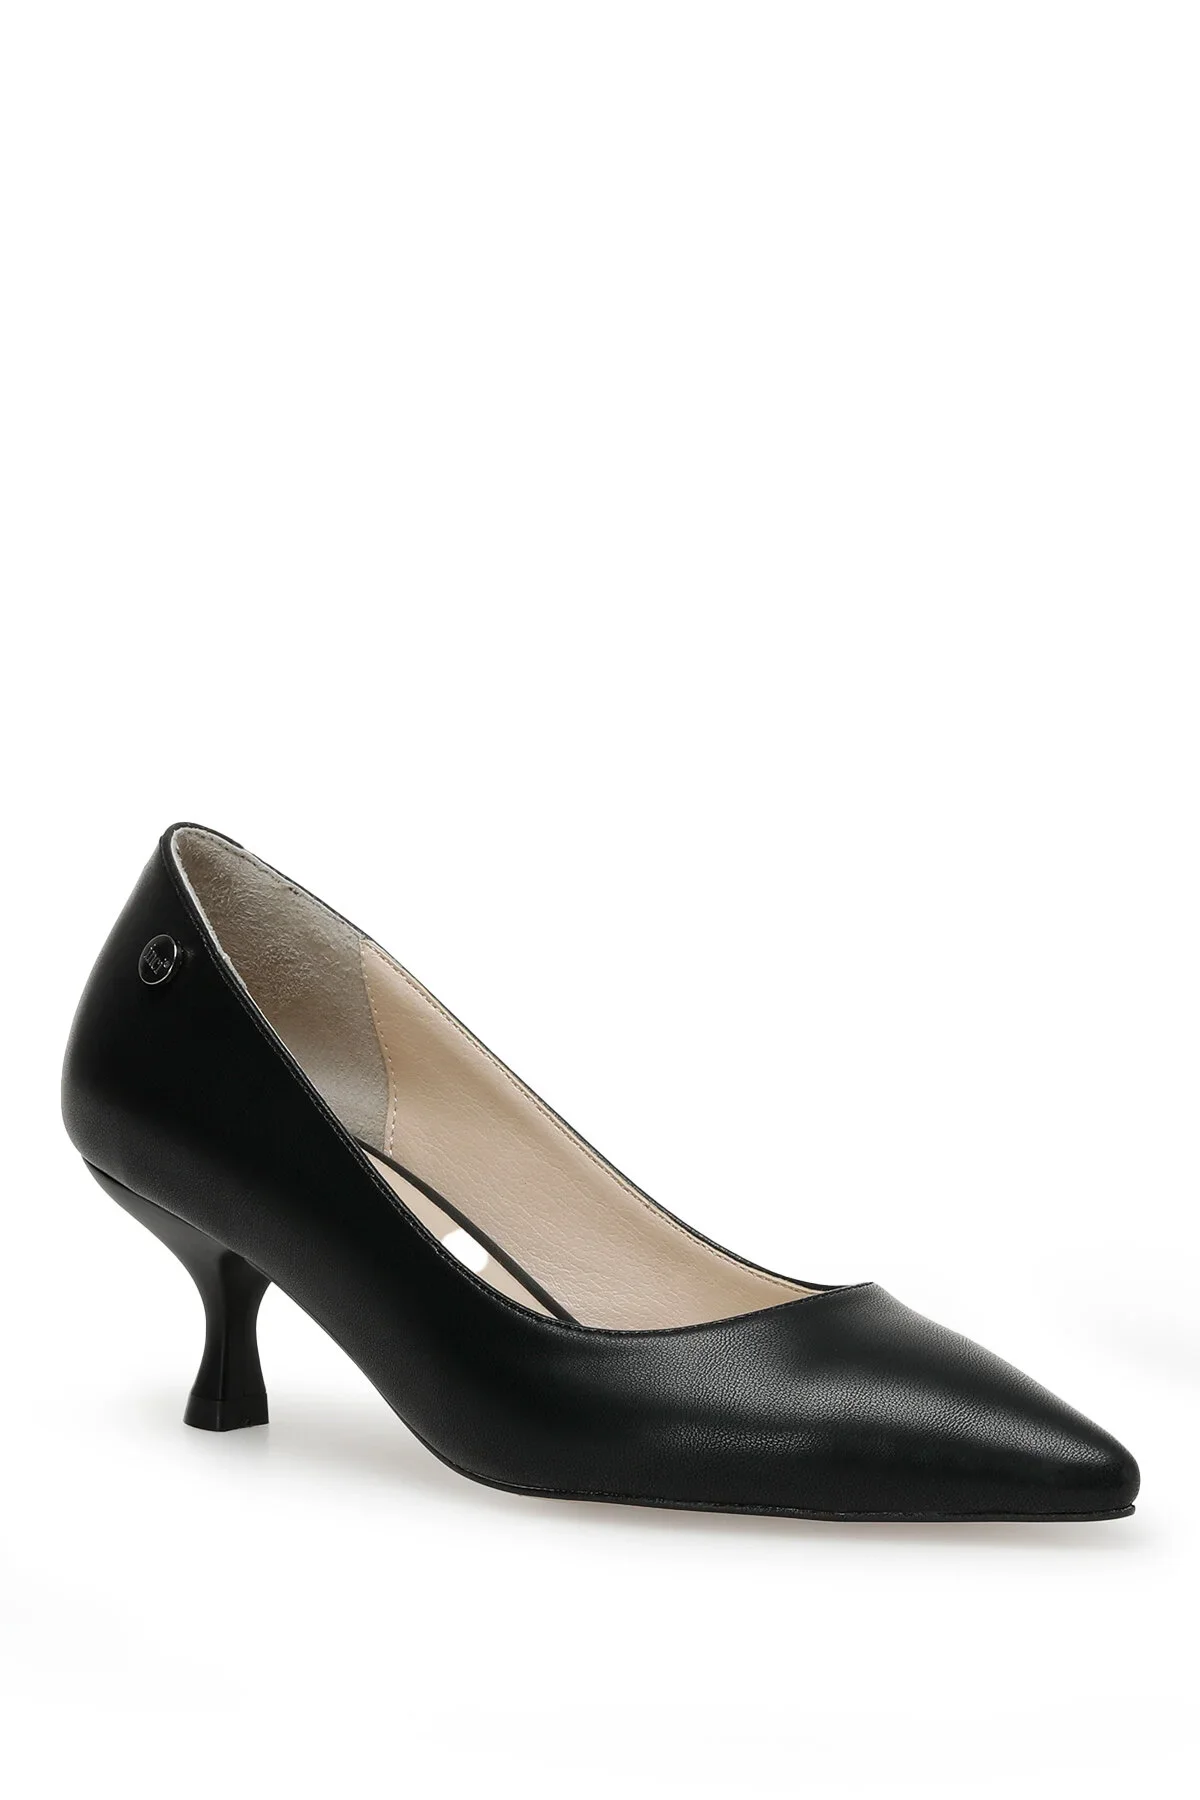 TRUDY 3FX Kadın Topuklu Ayakkabı-Siyah - 2